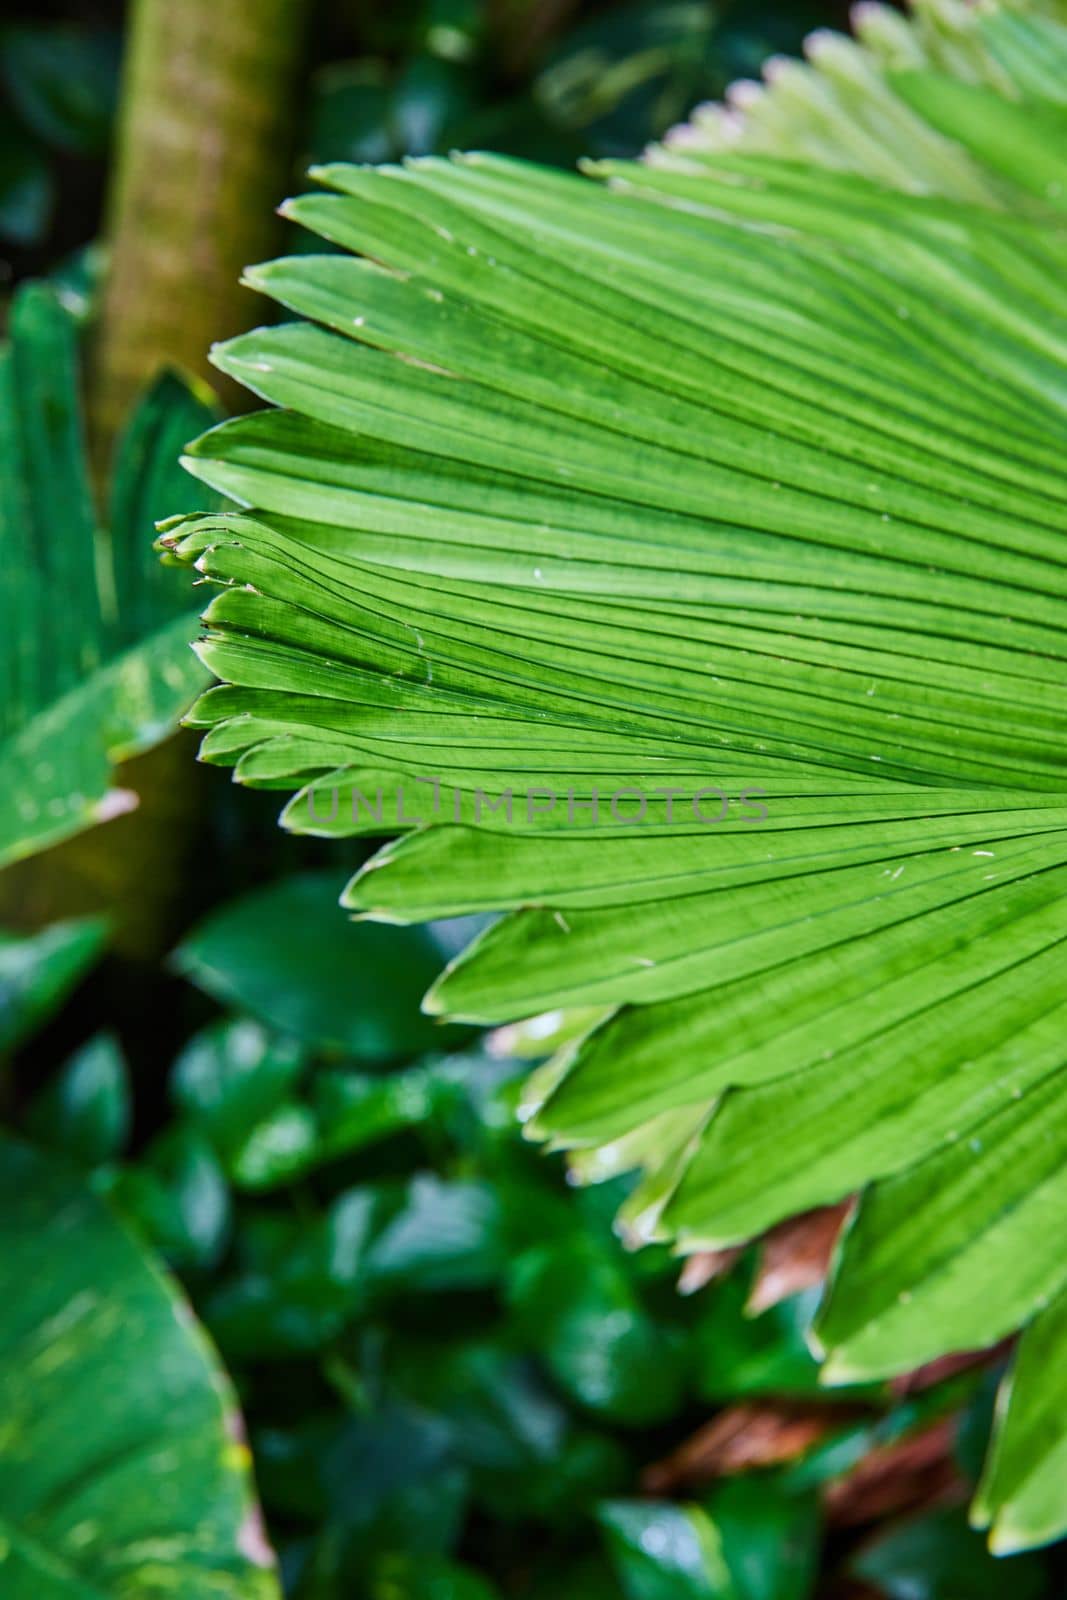 Fan shape leaves on rainforest plant in detail by njproductions